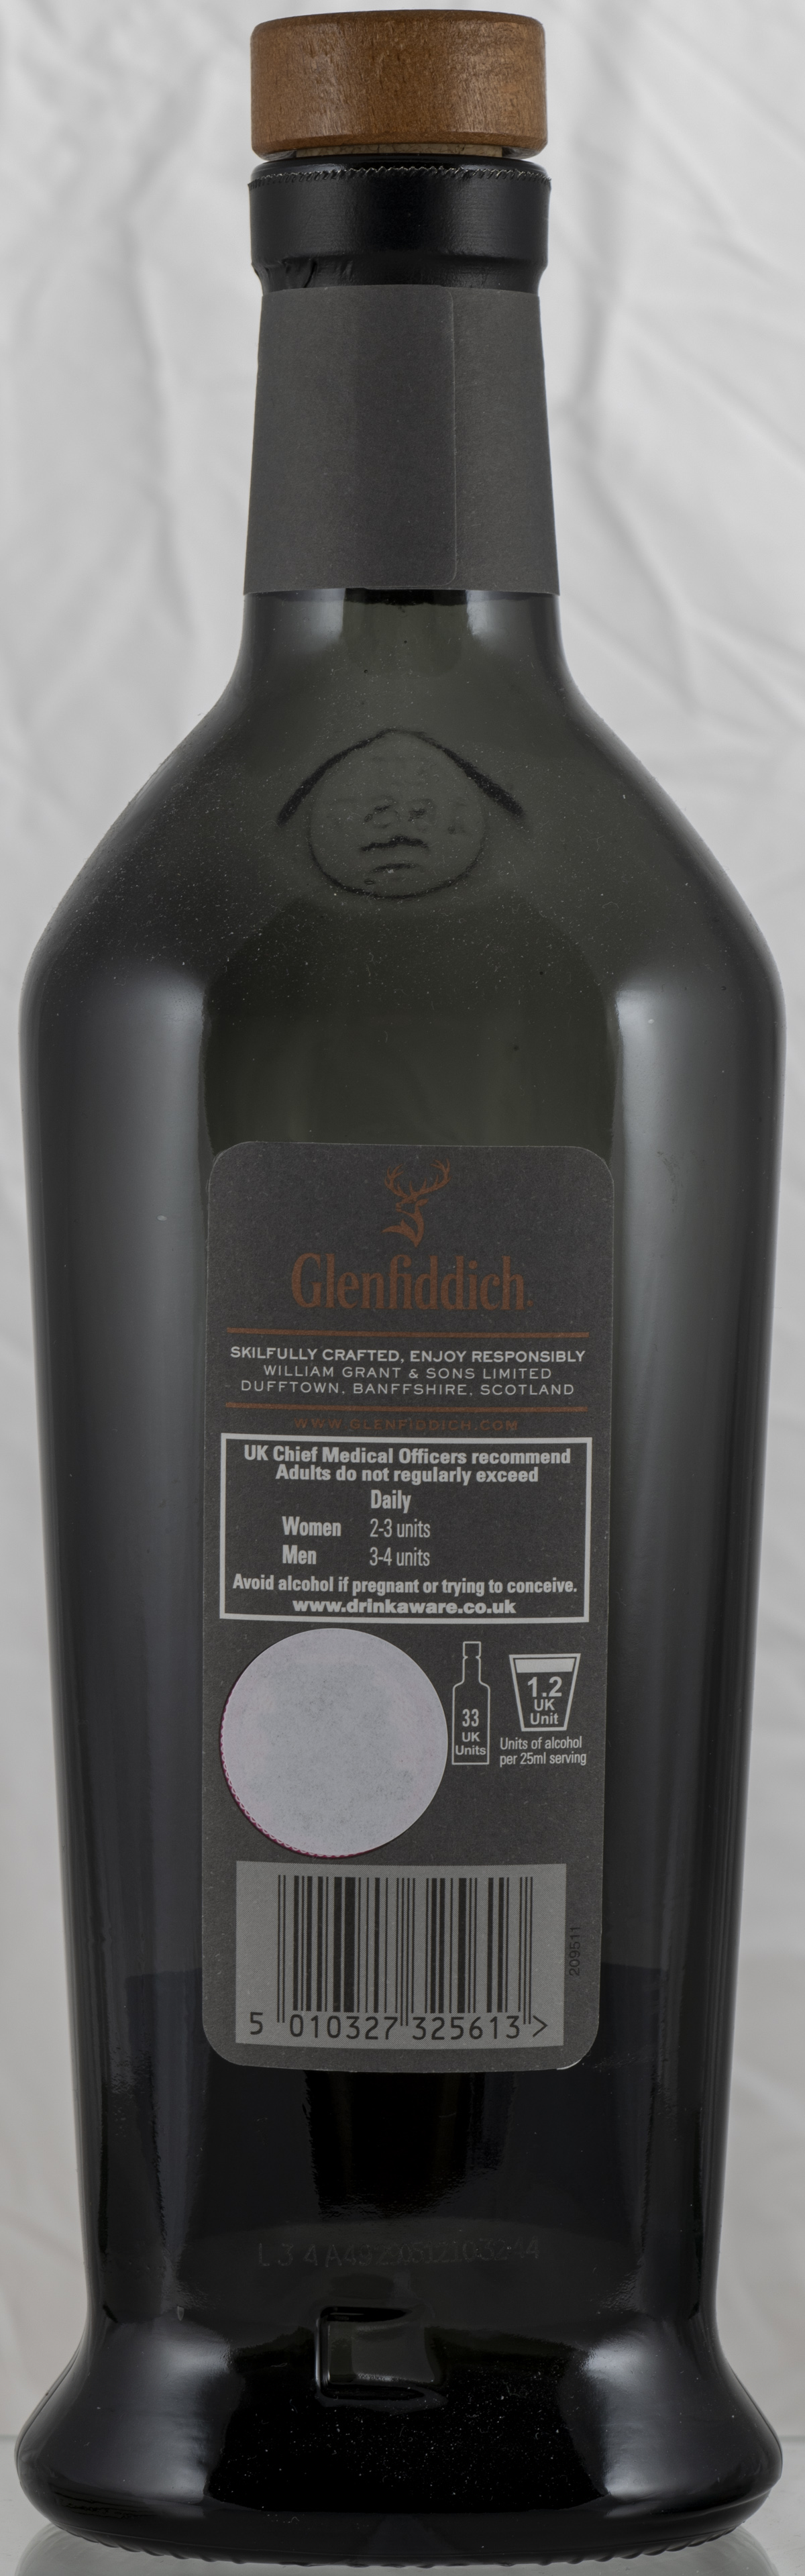 Billede: PHC_4083 - GlenFiddich Project XX - bottle back.jpg